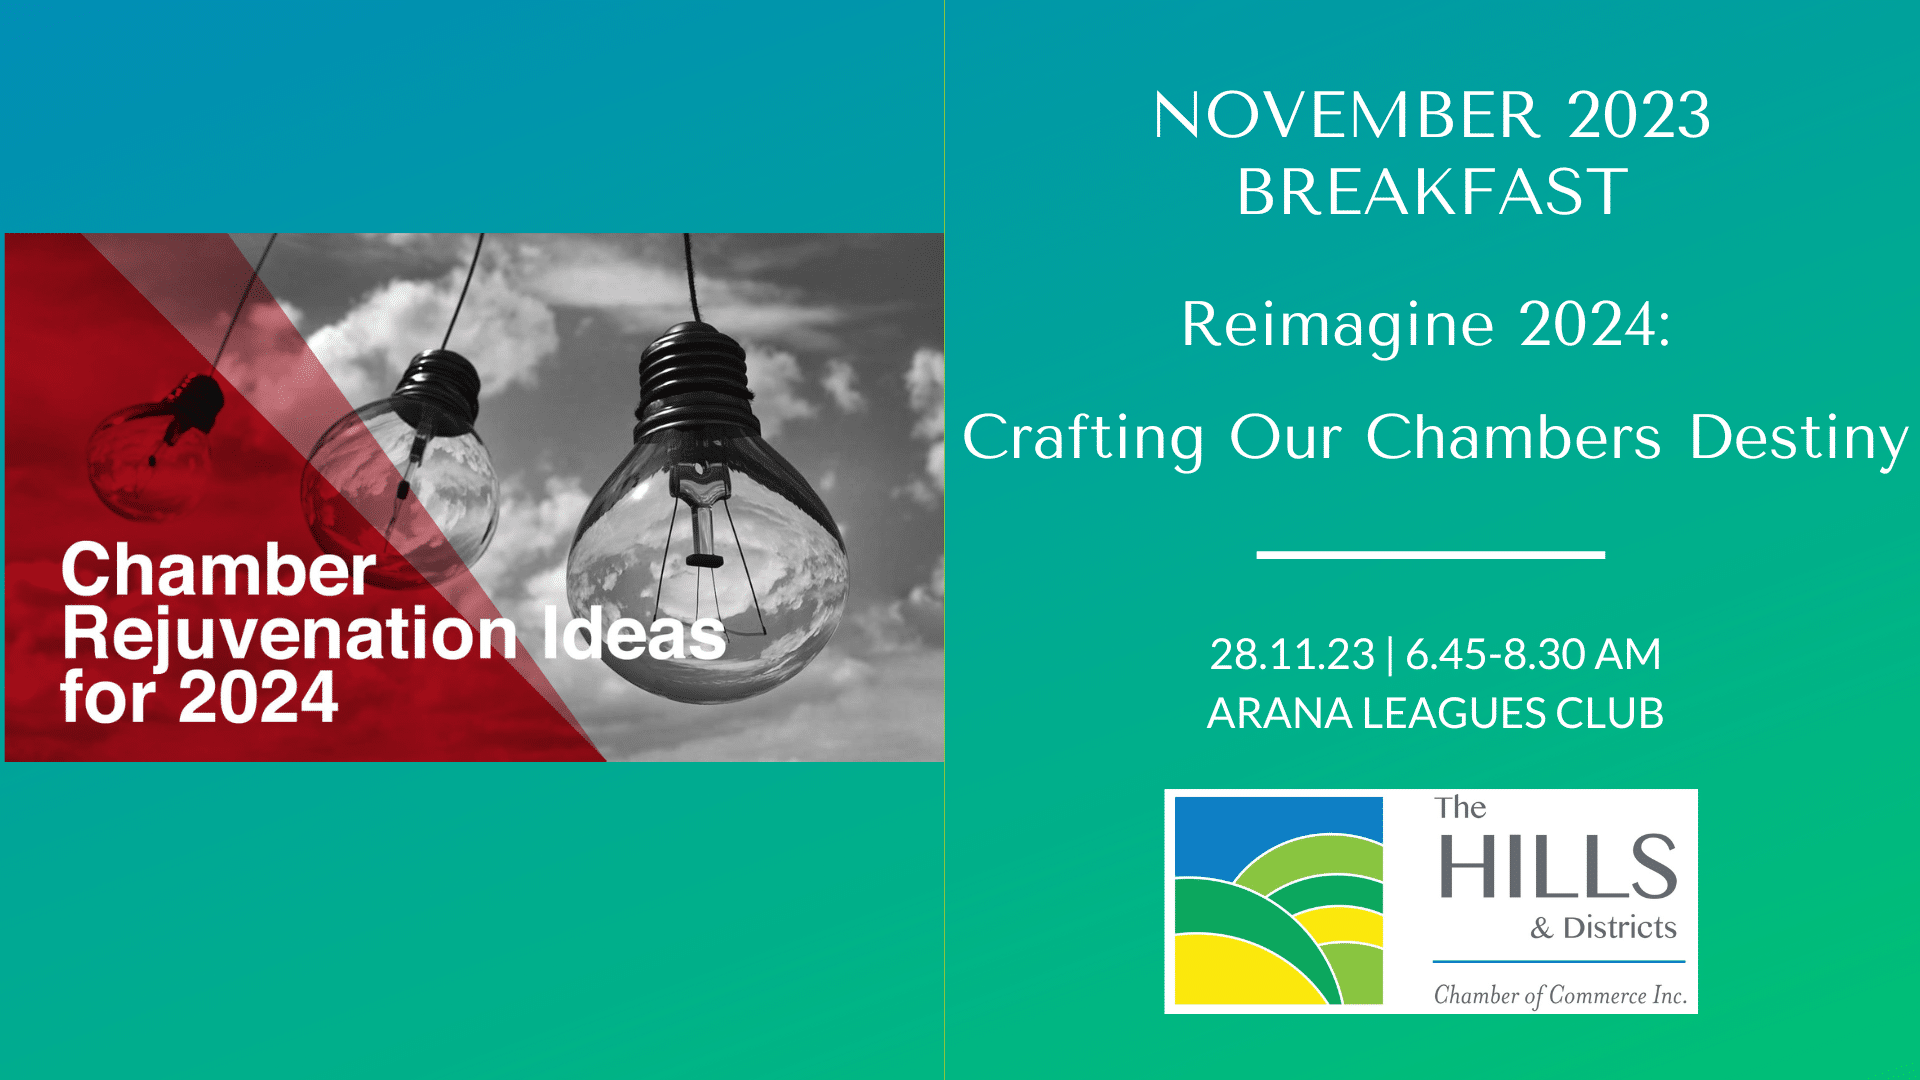 Breakfast Meeting » November 2023 Breakfast – Reimagine 2024: Crafting Our Chambers Destiny